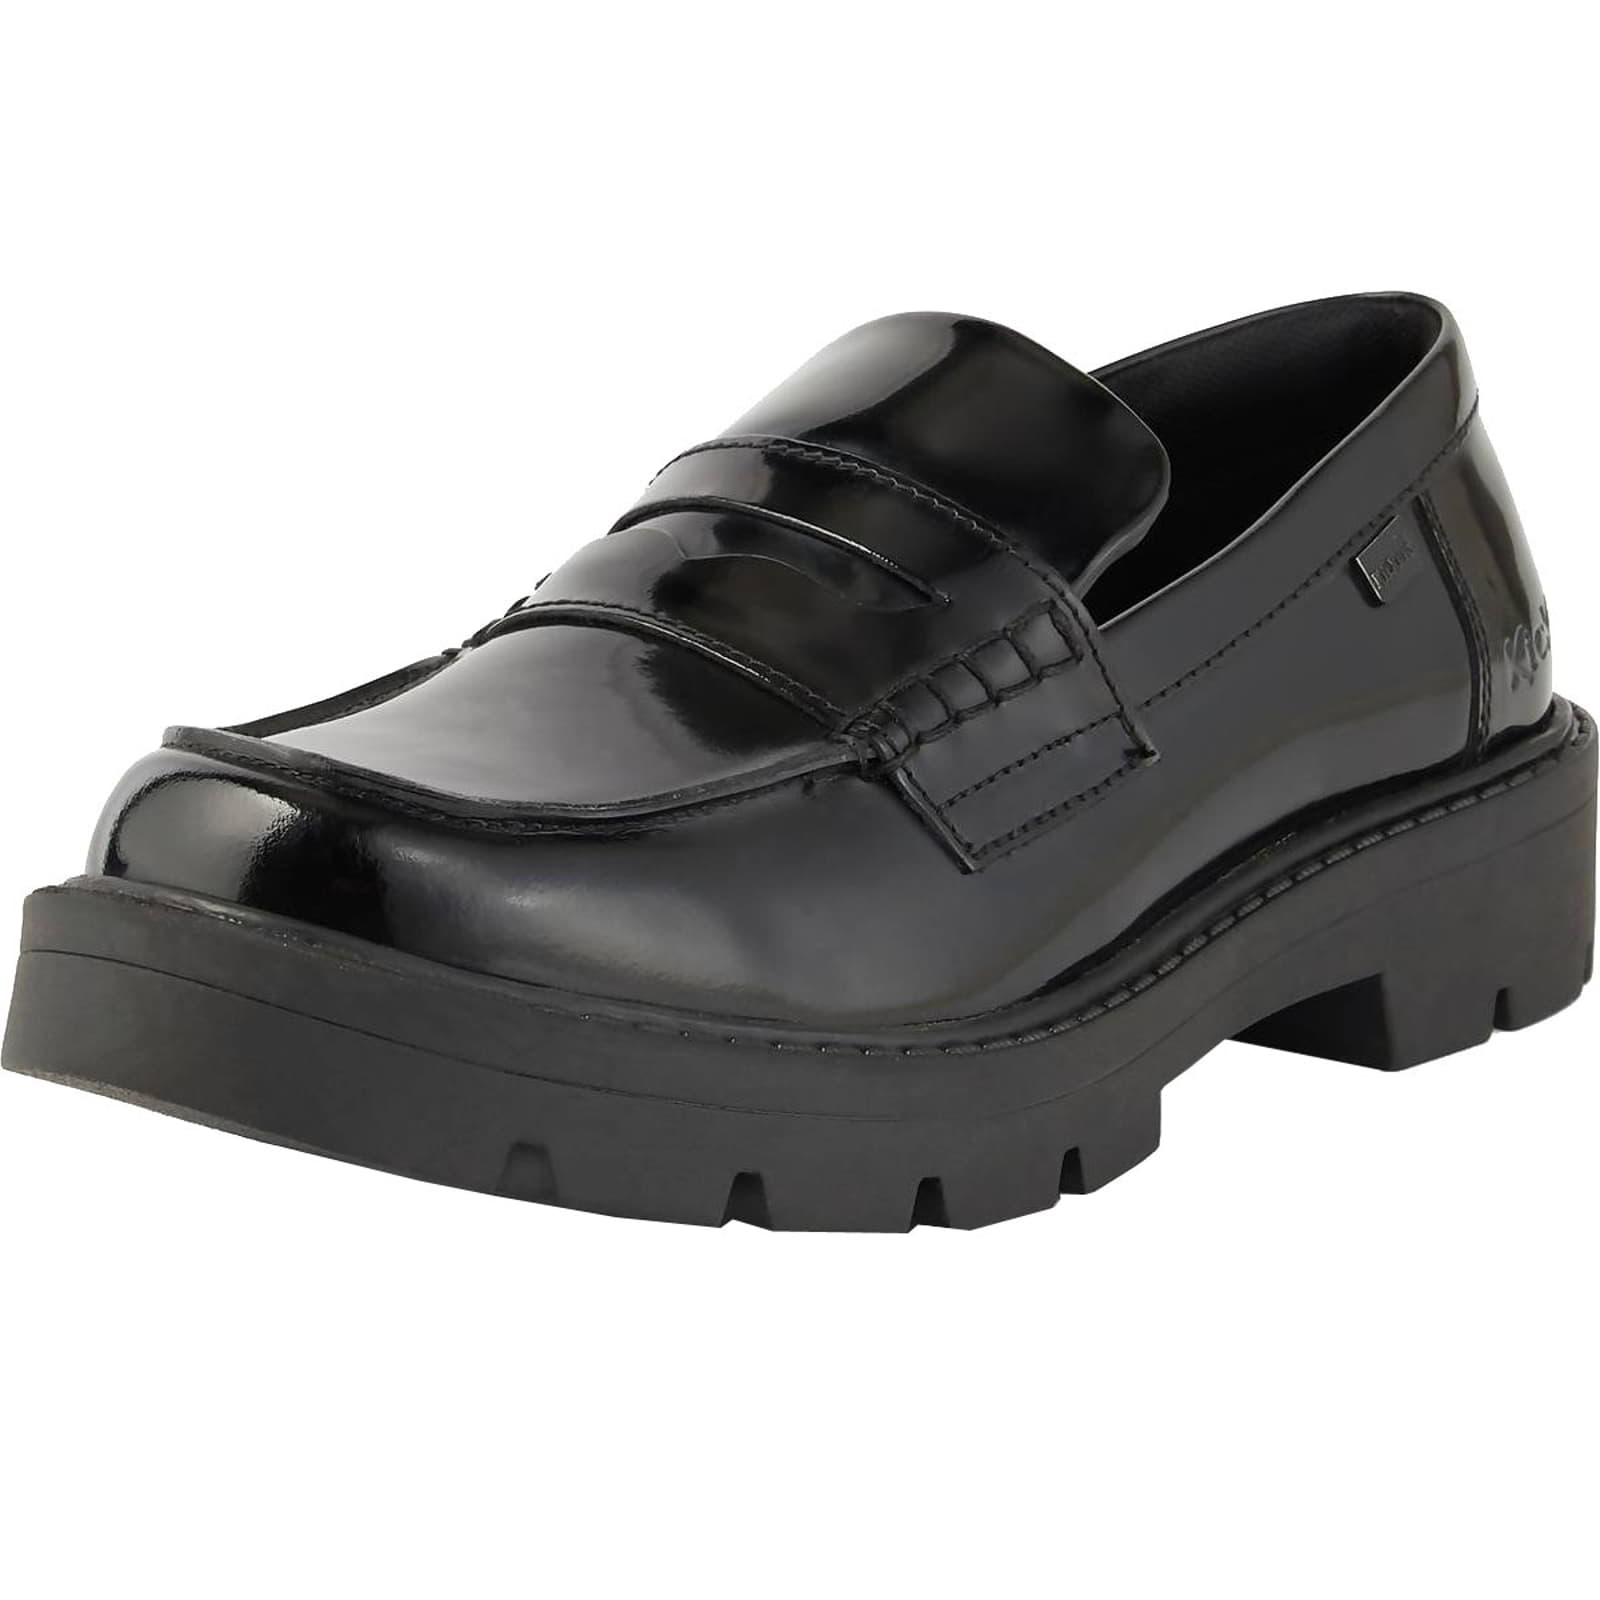 Kickers Women's Kori Loafer Leather Shoes  - UK 7 / EU 41